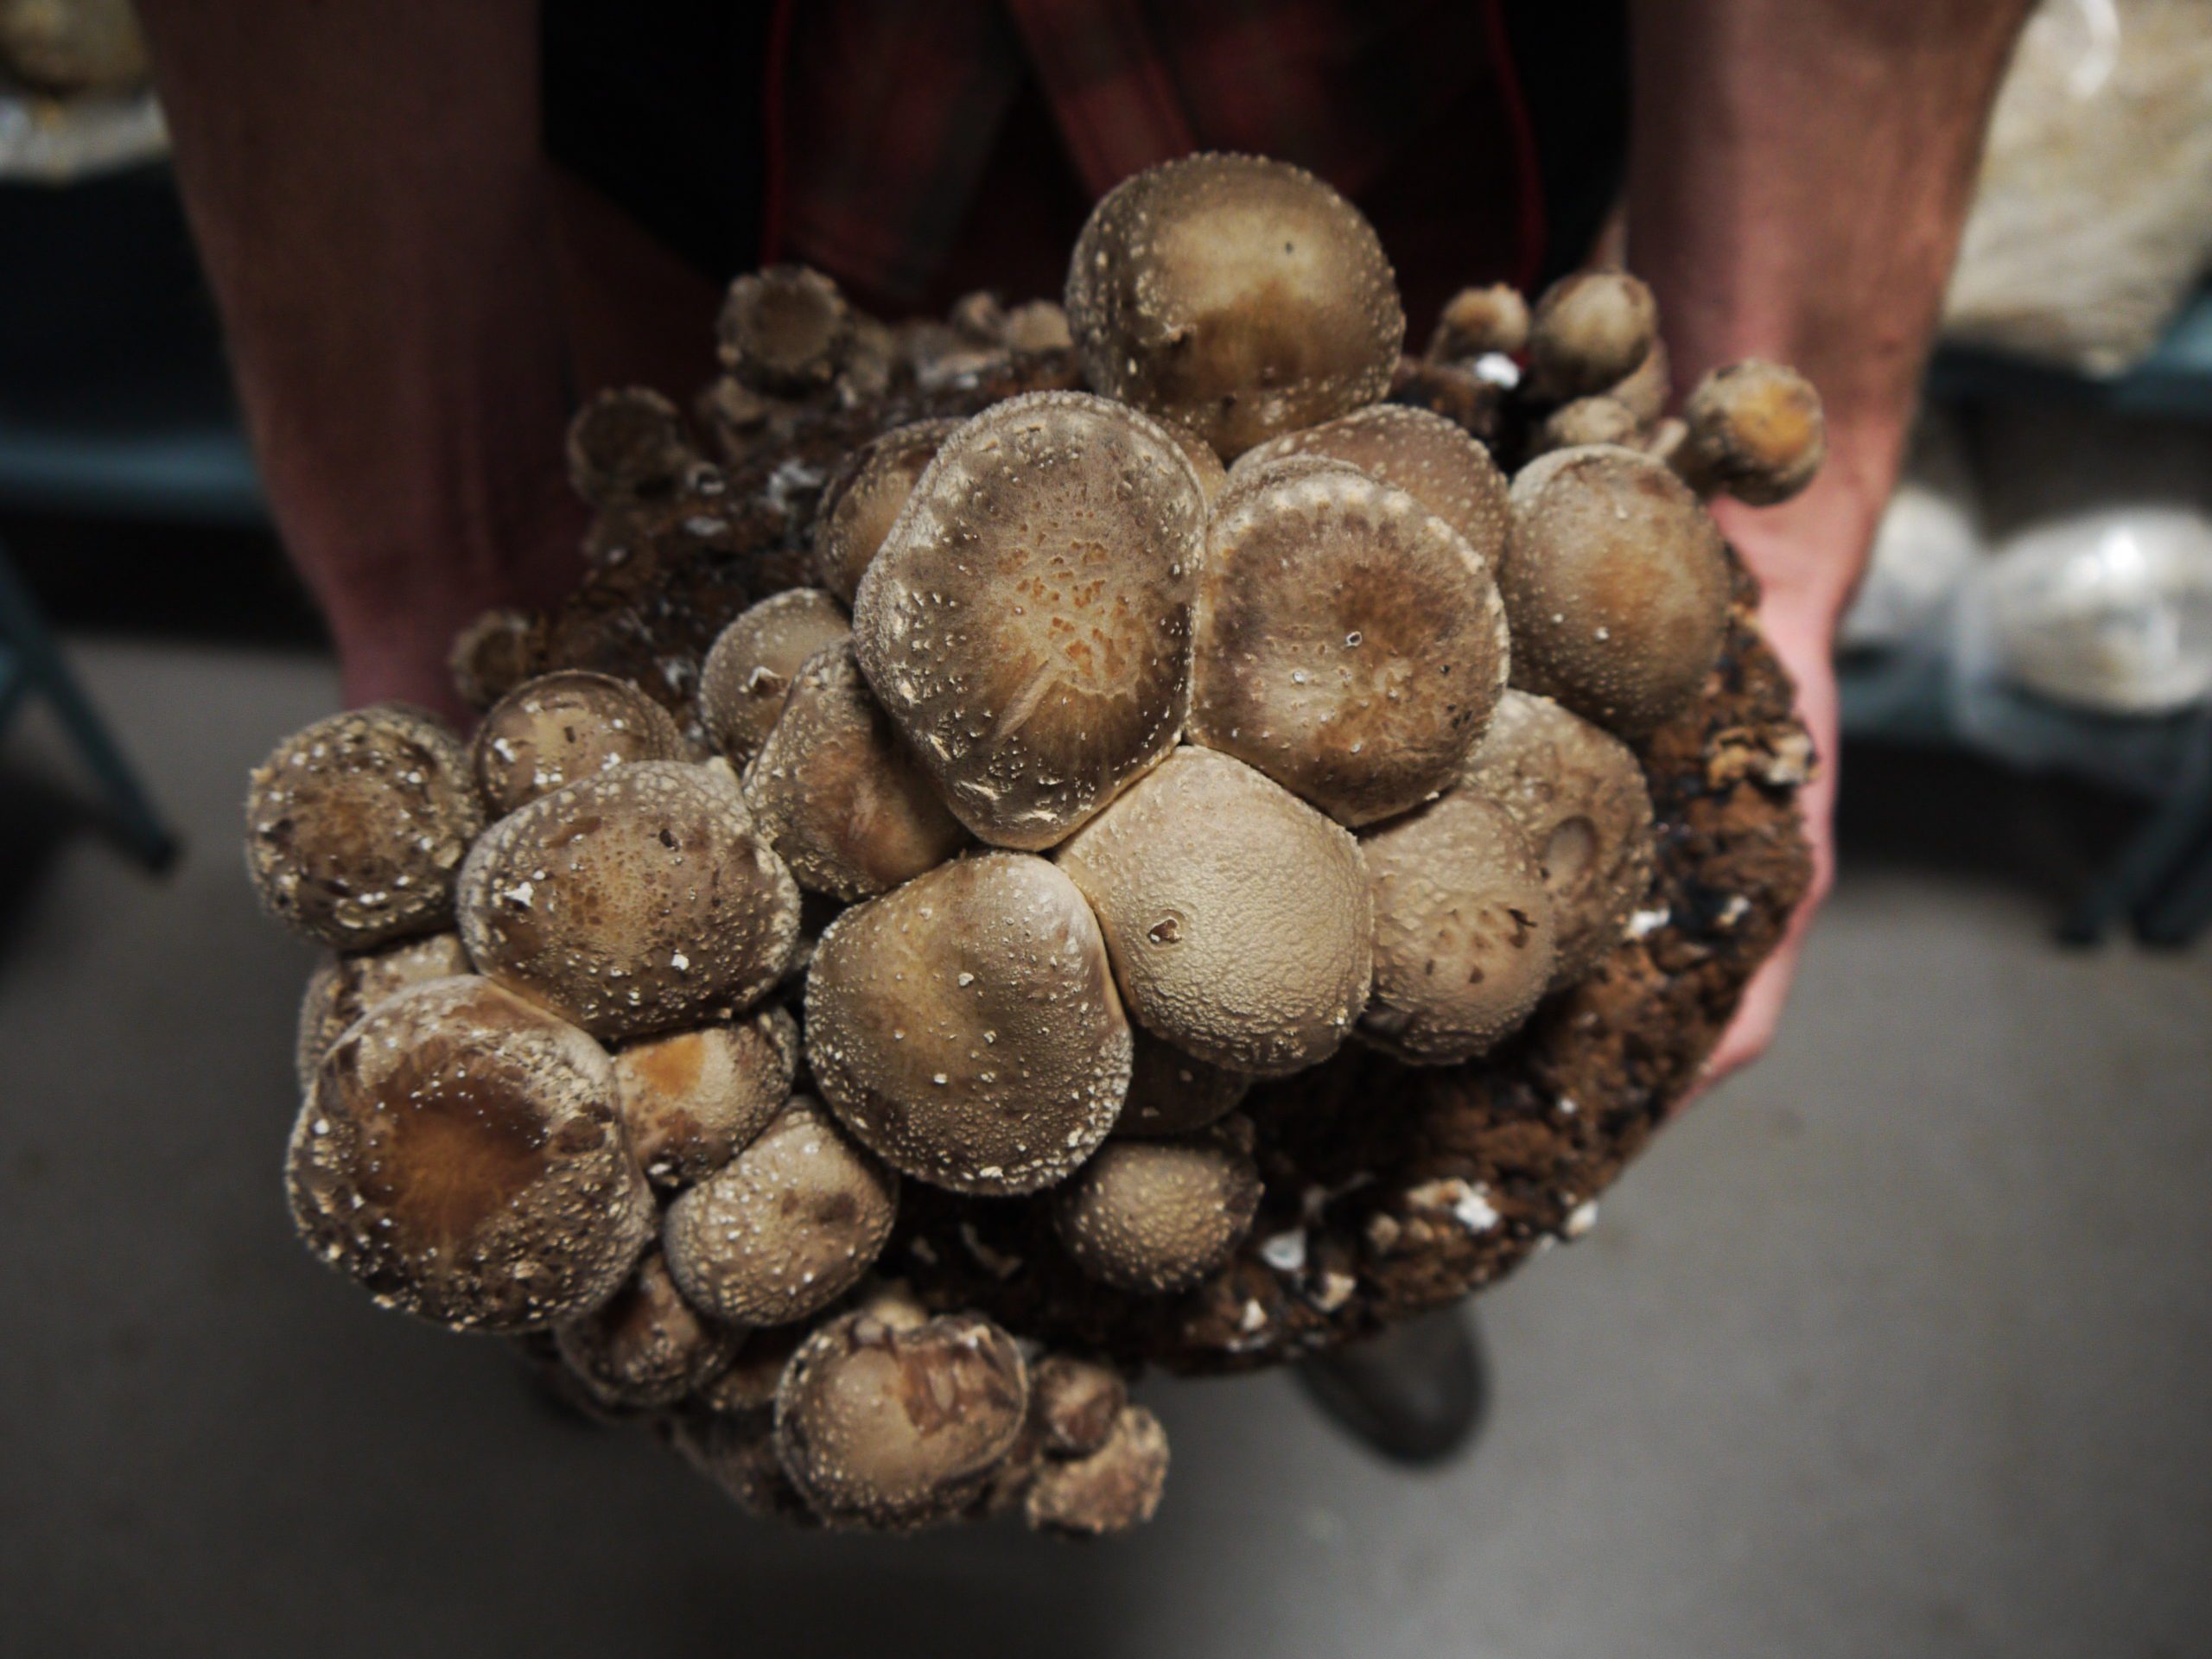 Mycélium en granulés de champignon shiitake, Lentinula edodes